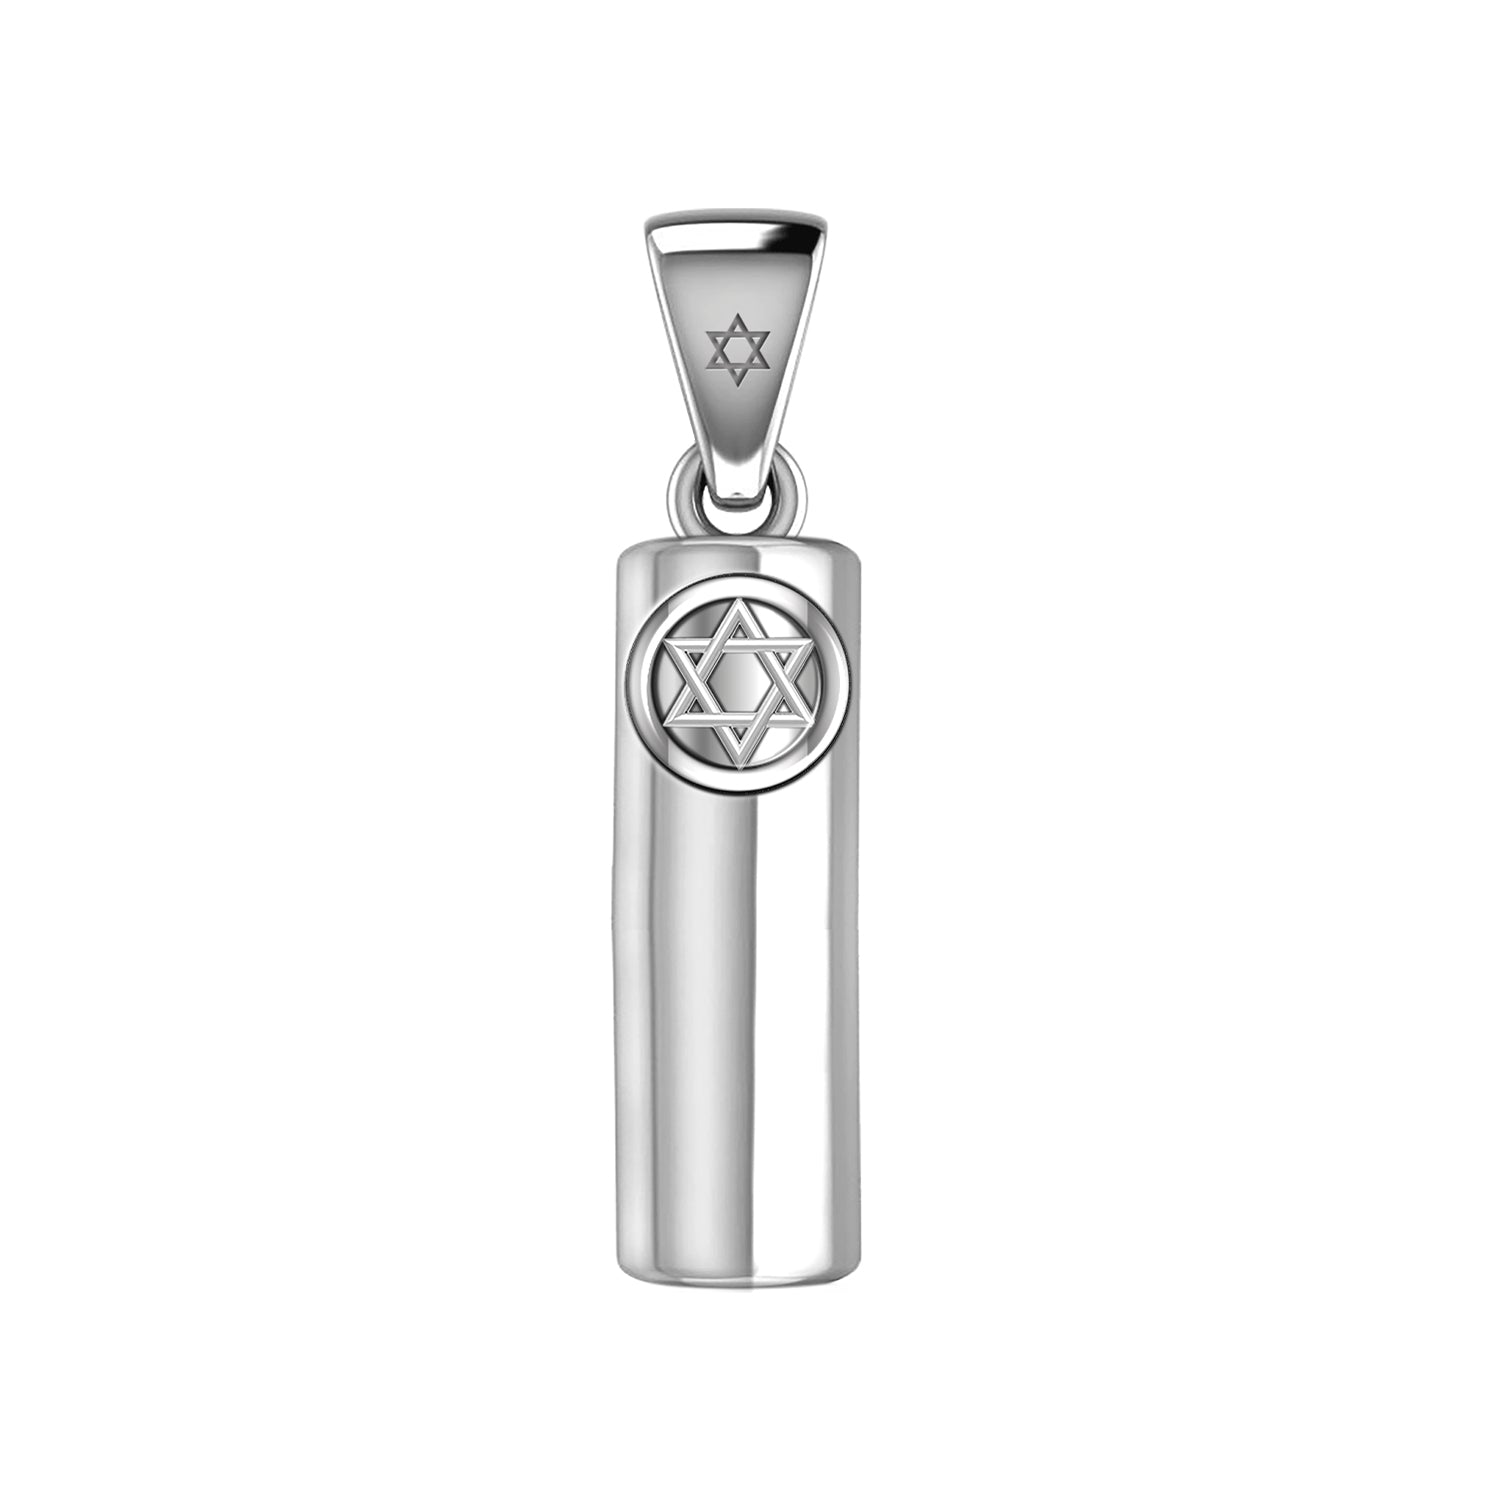 Men's 925 Sterling Silver Jewish Star of David Mezuzah Pendant Necklace, 30mm - US Jewels